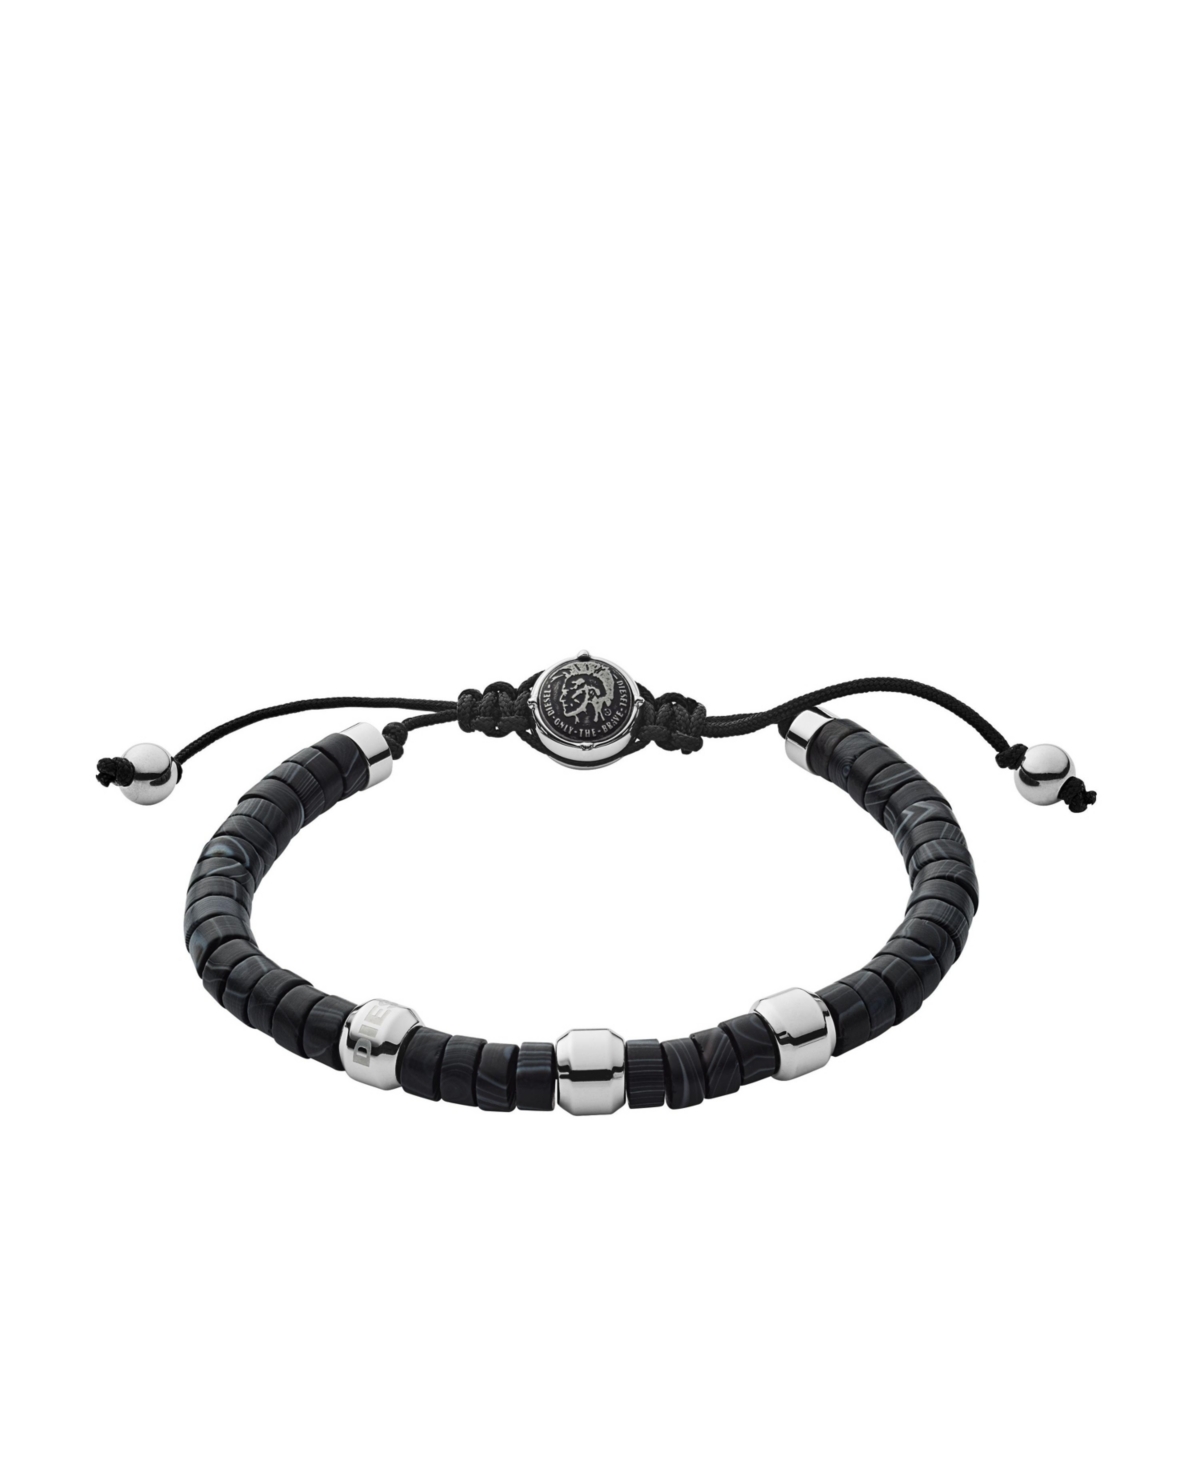 Men's Stainless-Steel and Black Line Agate Bead Bracelet - Black